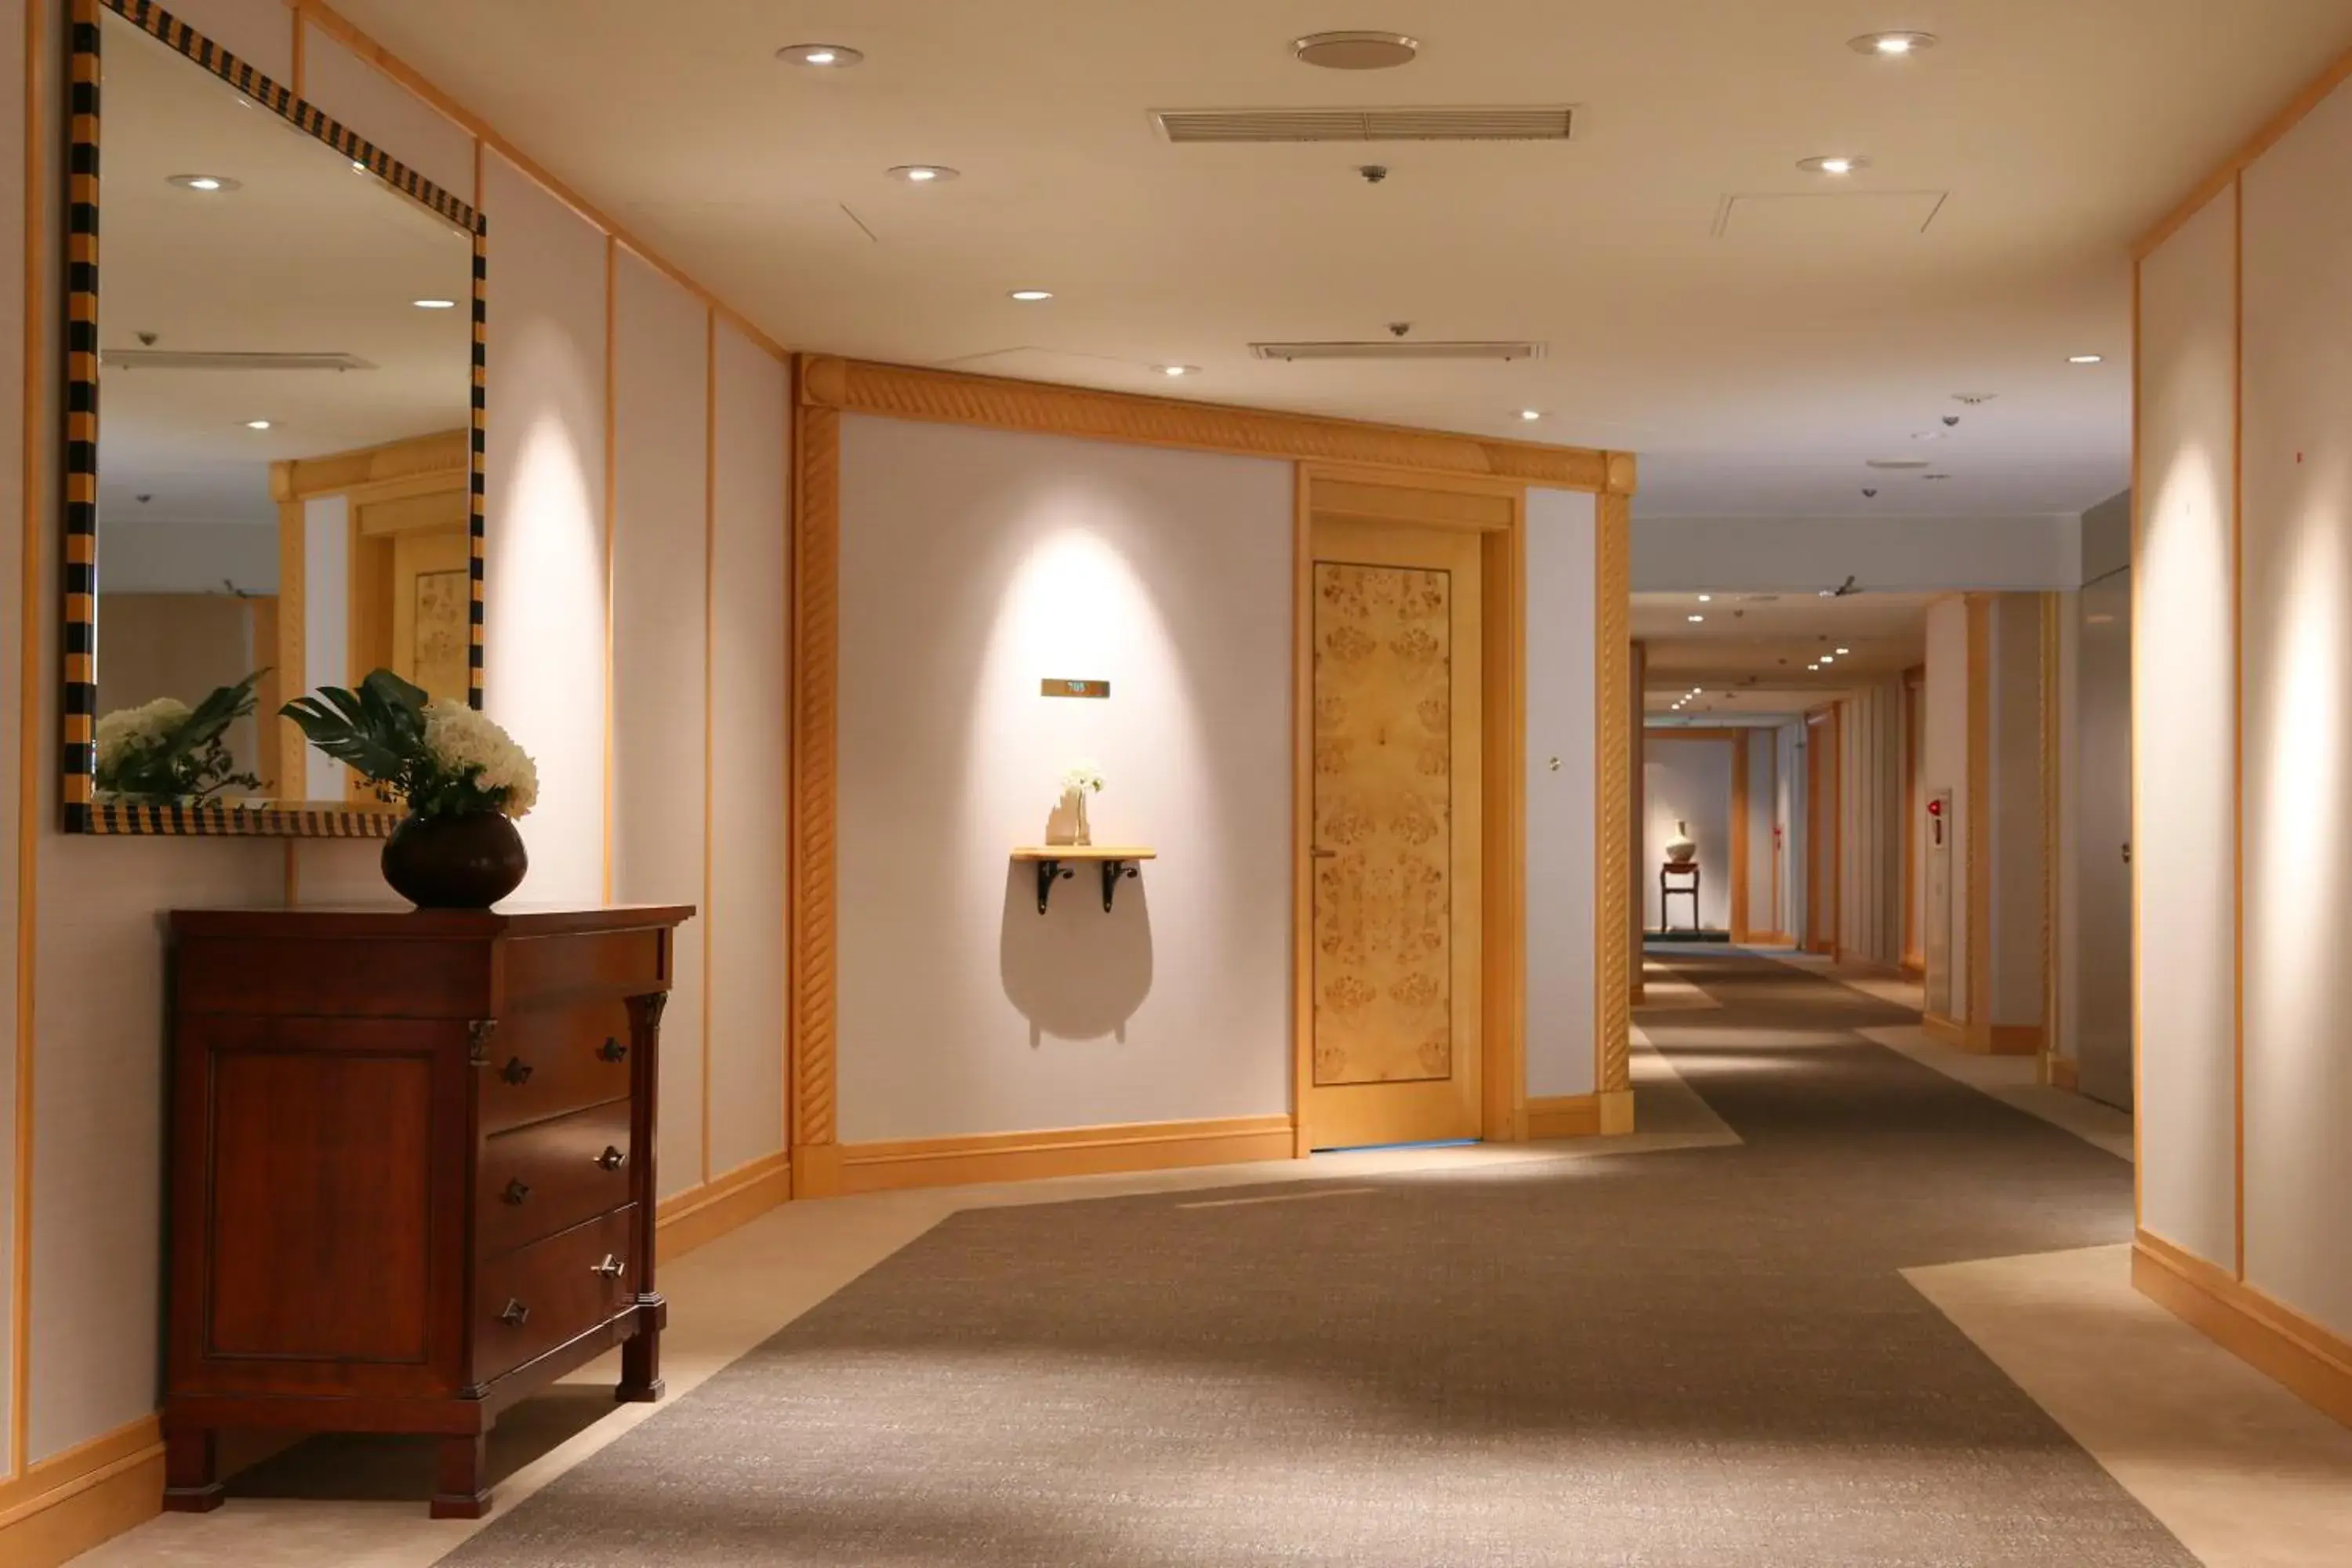 Area and facilities in Hotel Allamanda Aoyama Tokyo